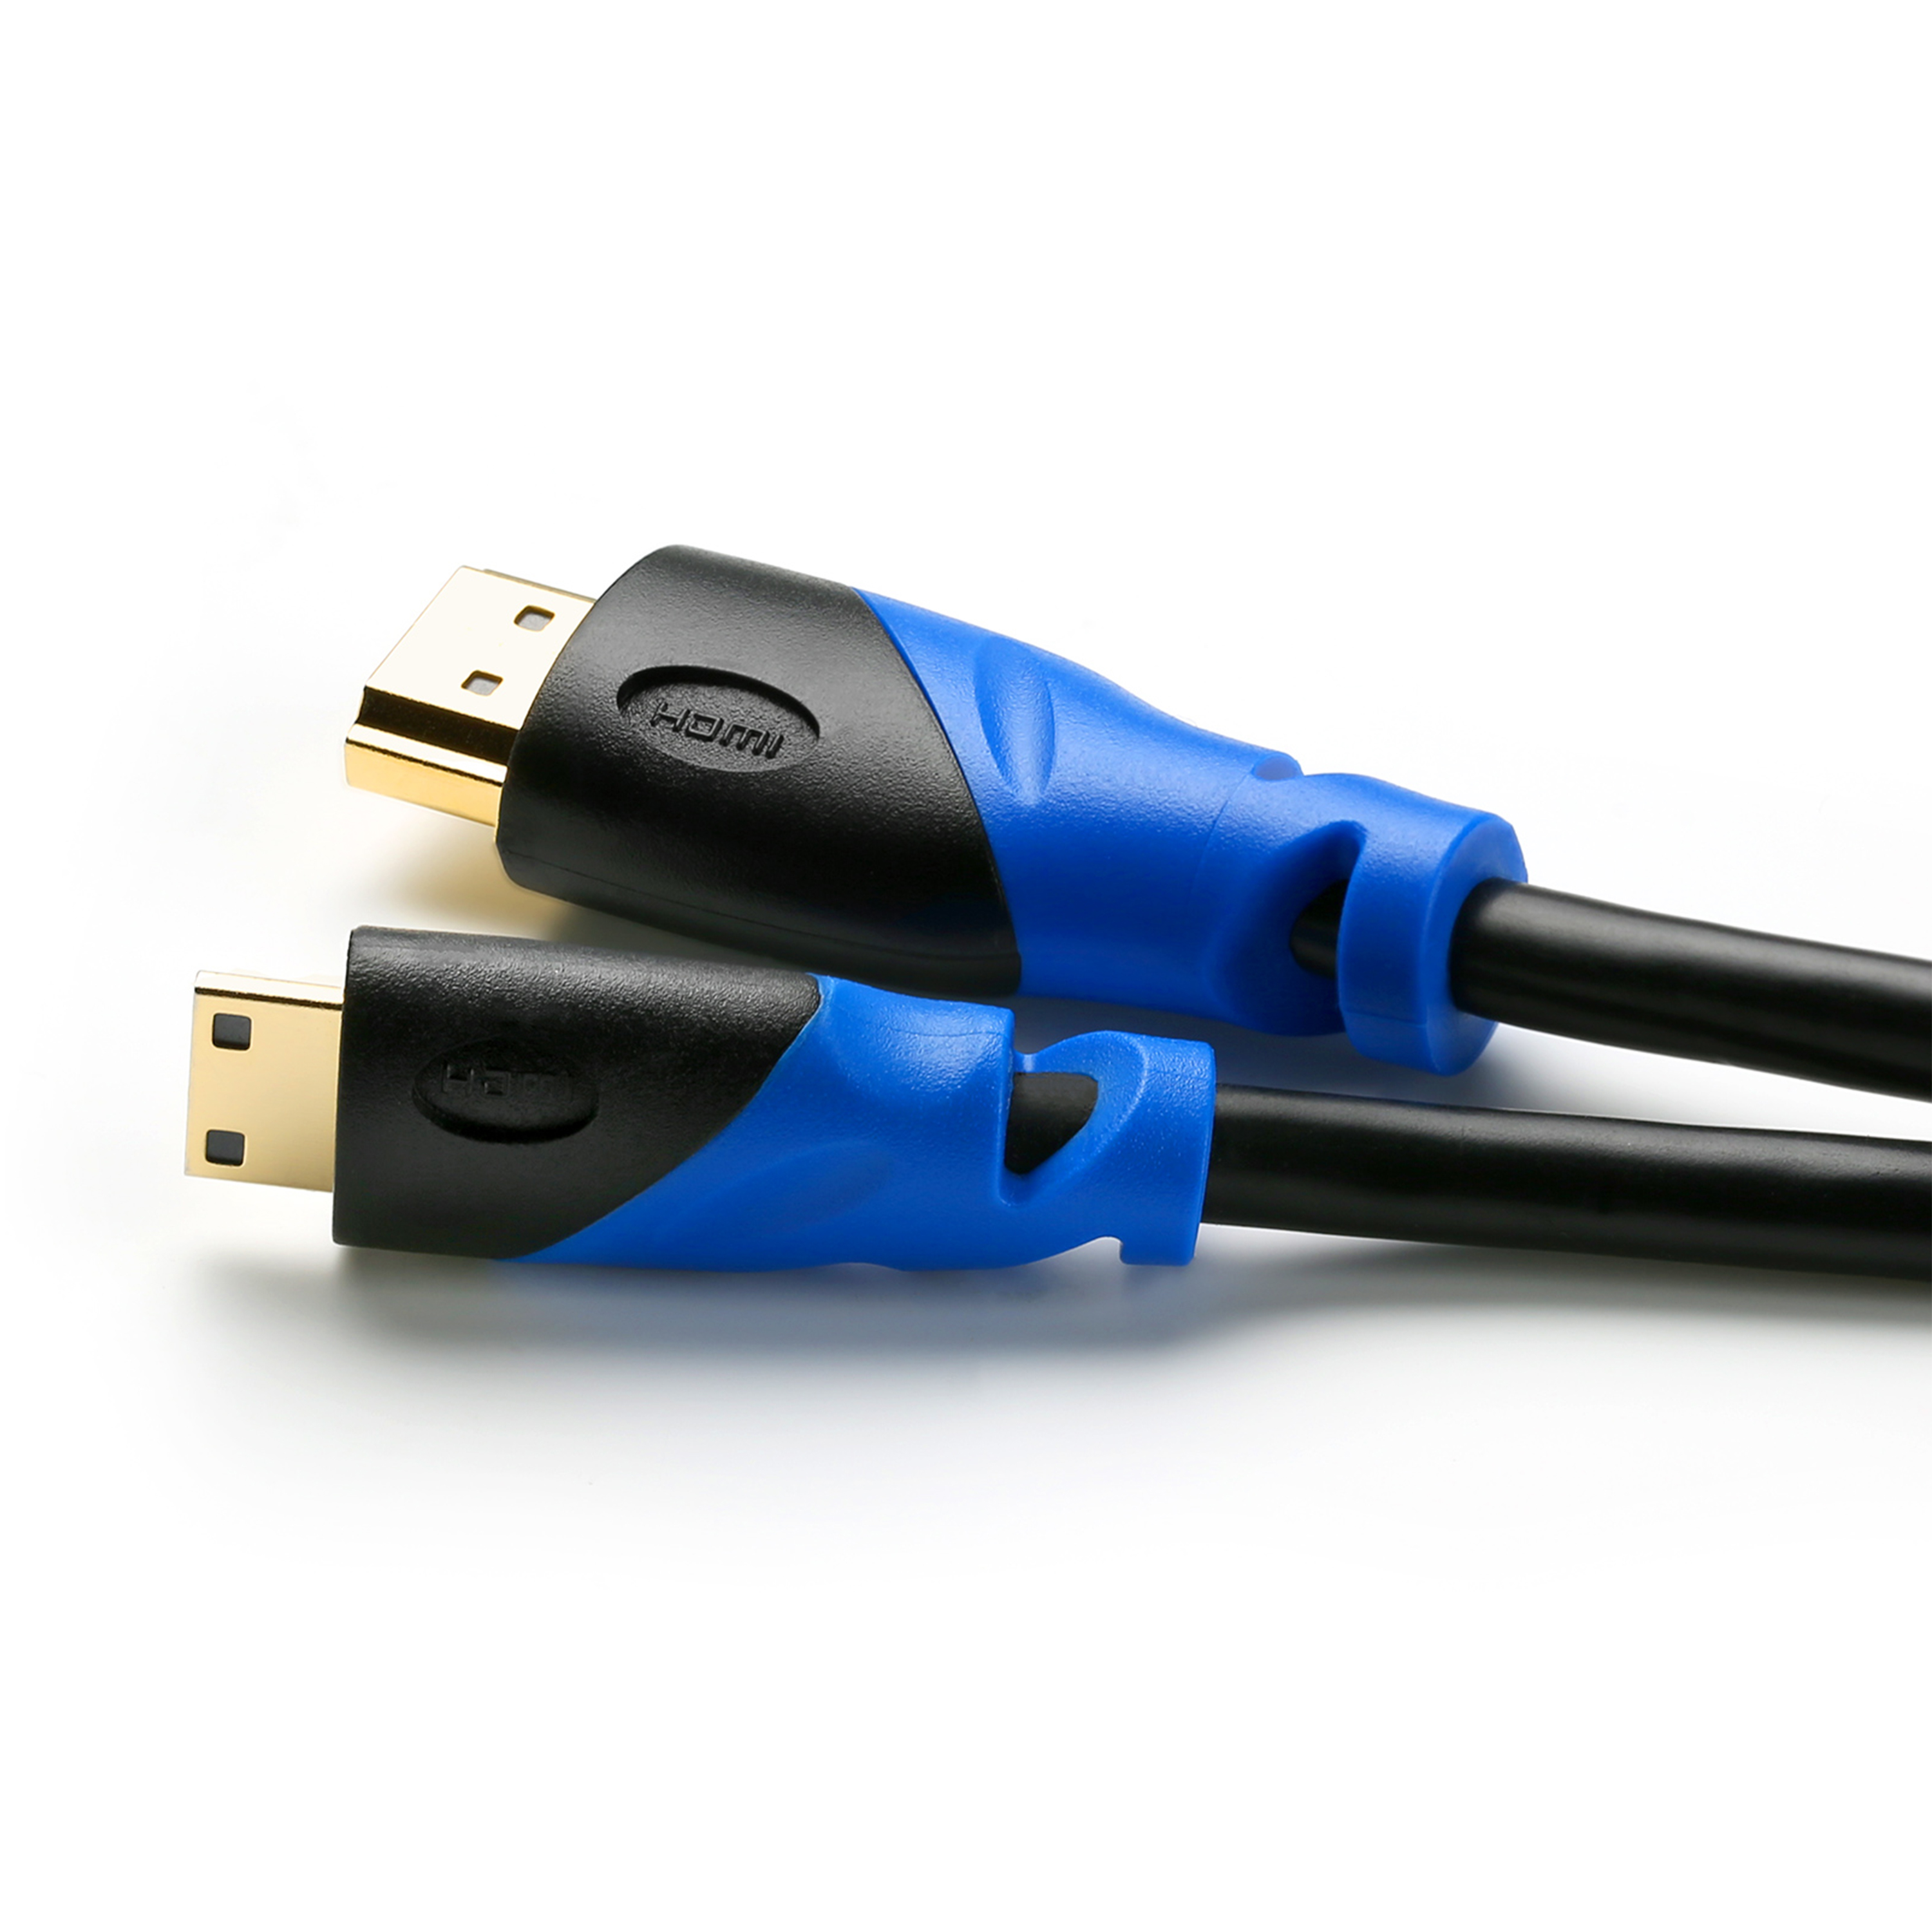 CSL MiniHDMI 2.0 Kabel, HDMI 2m schwarz/blau Kabel